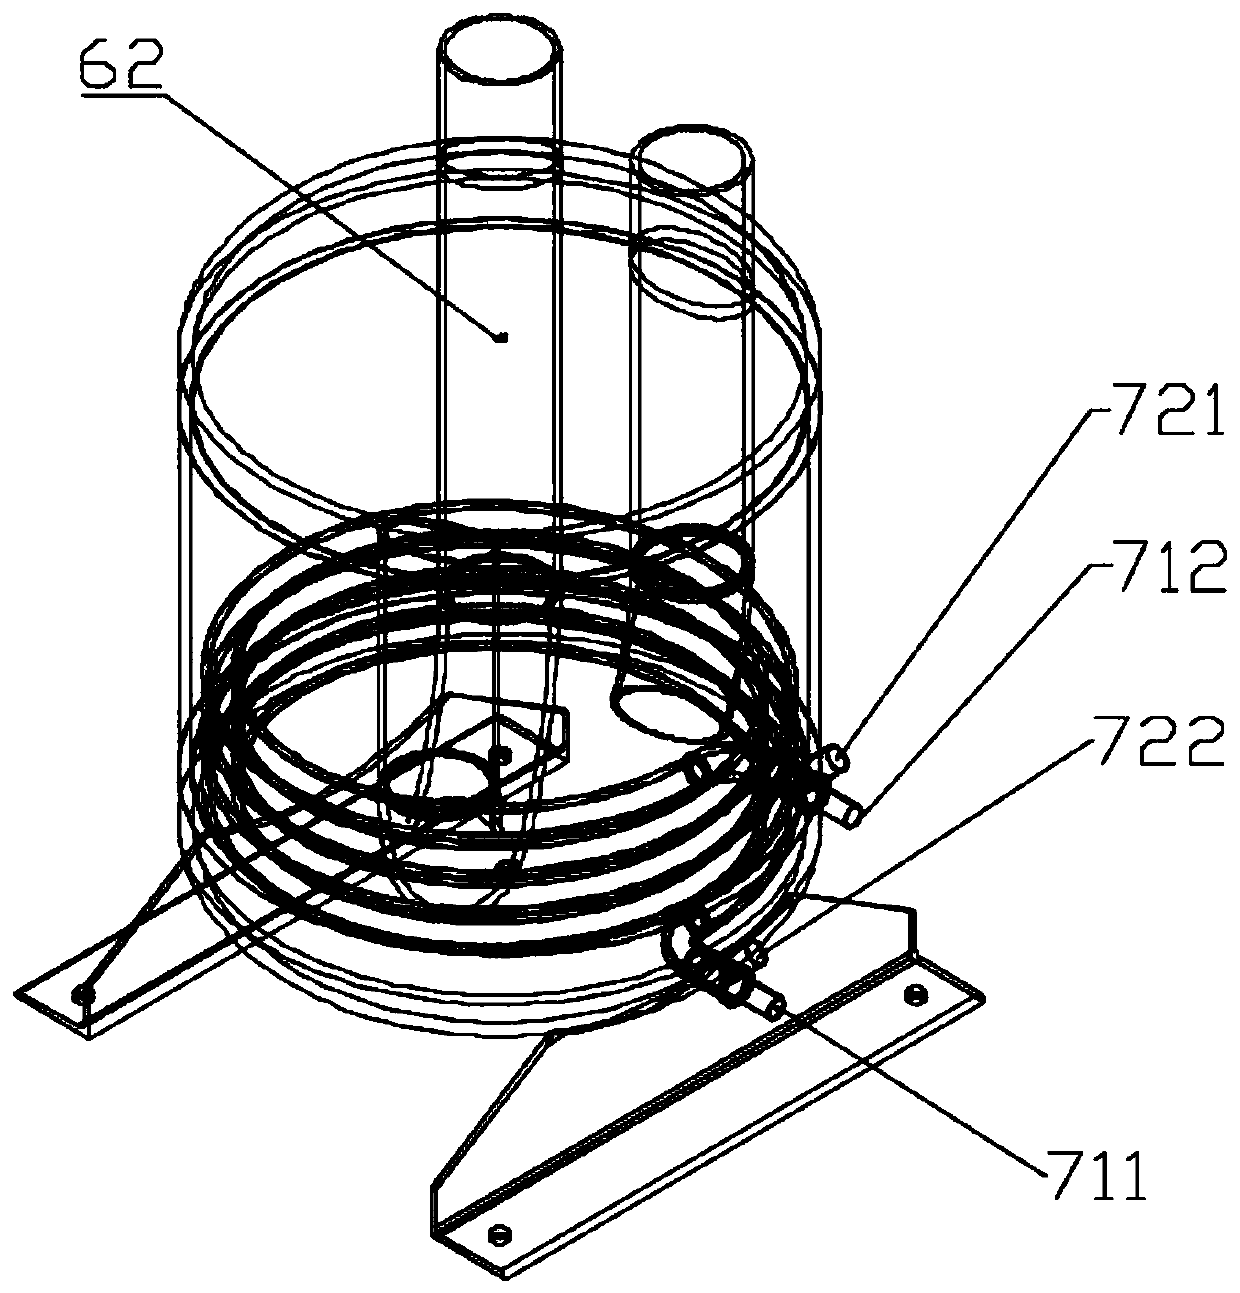 Heat exchange gas-liquid separator with economizer function